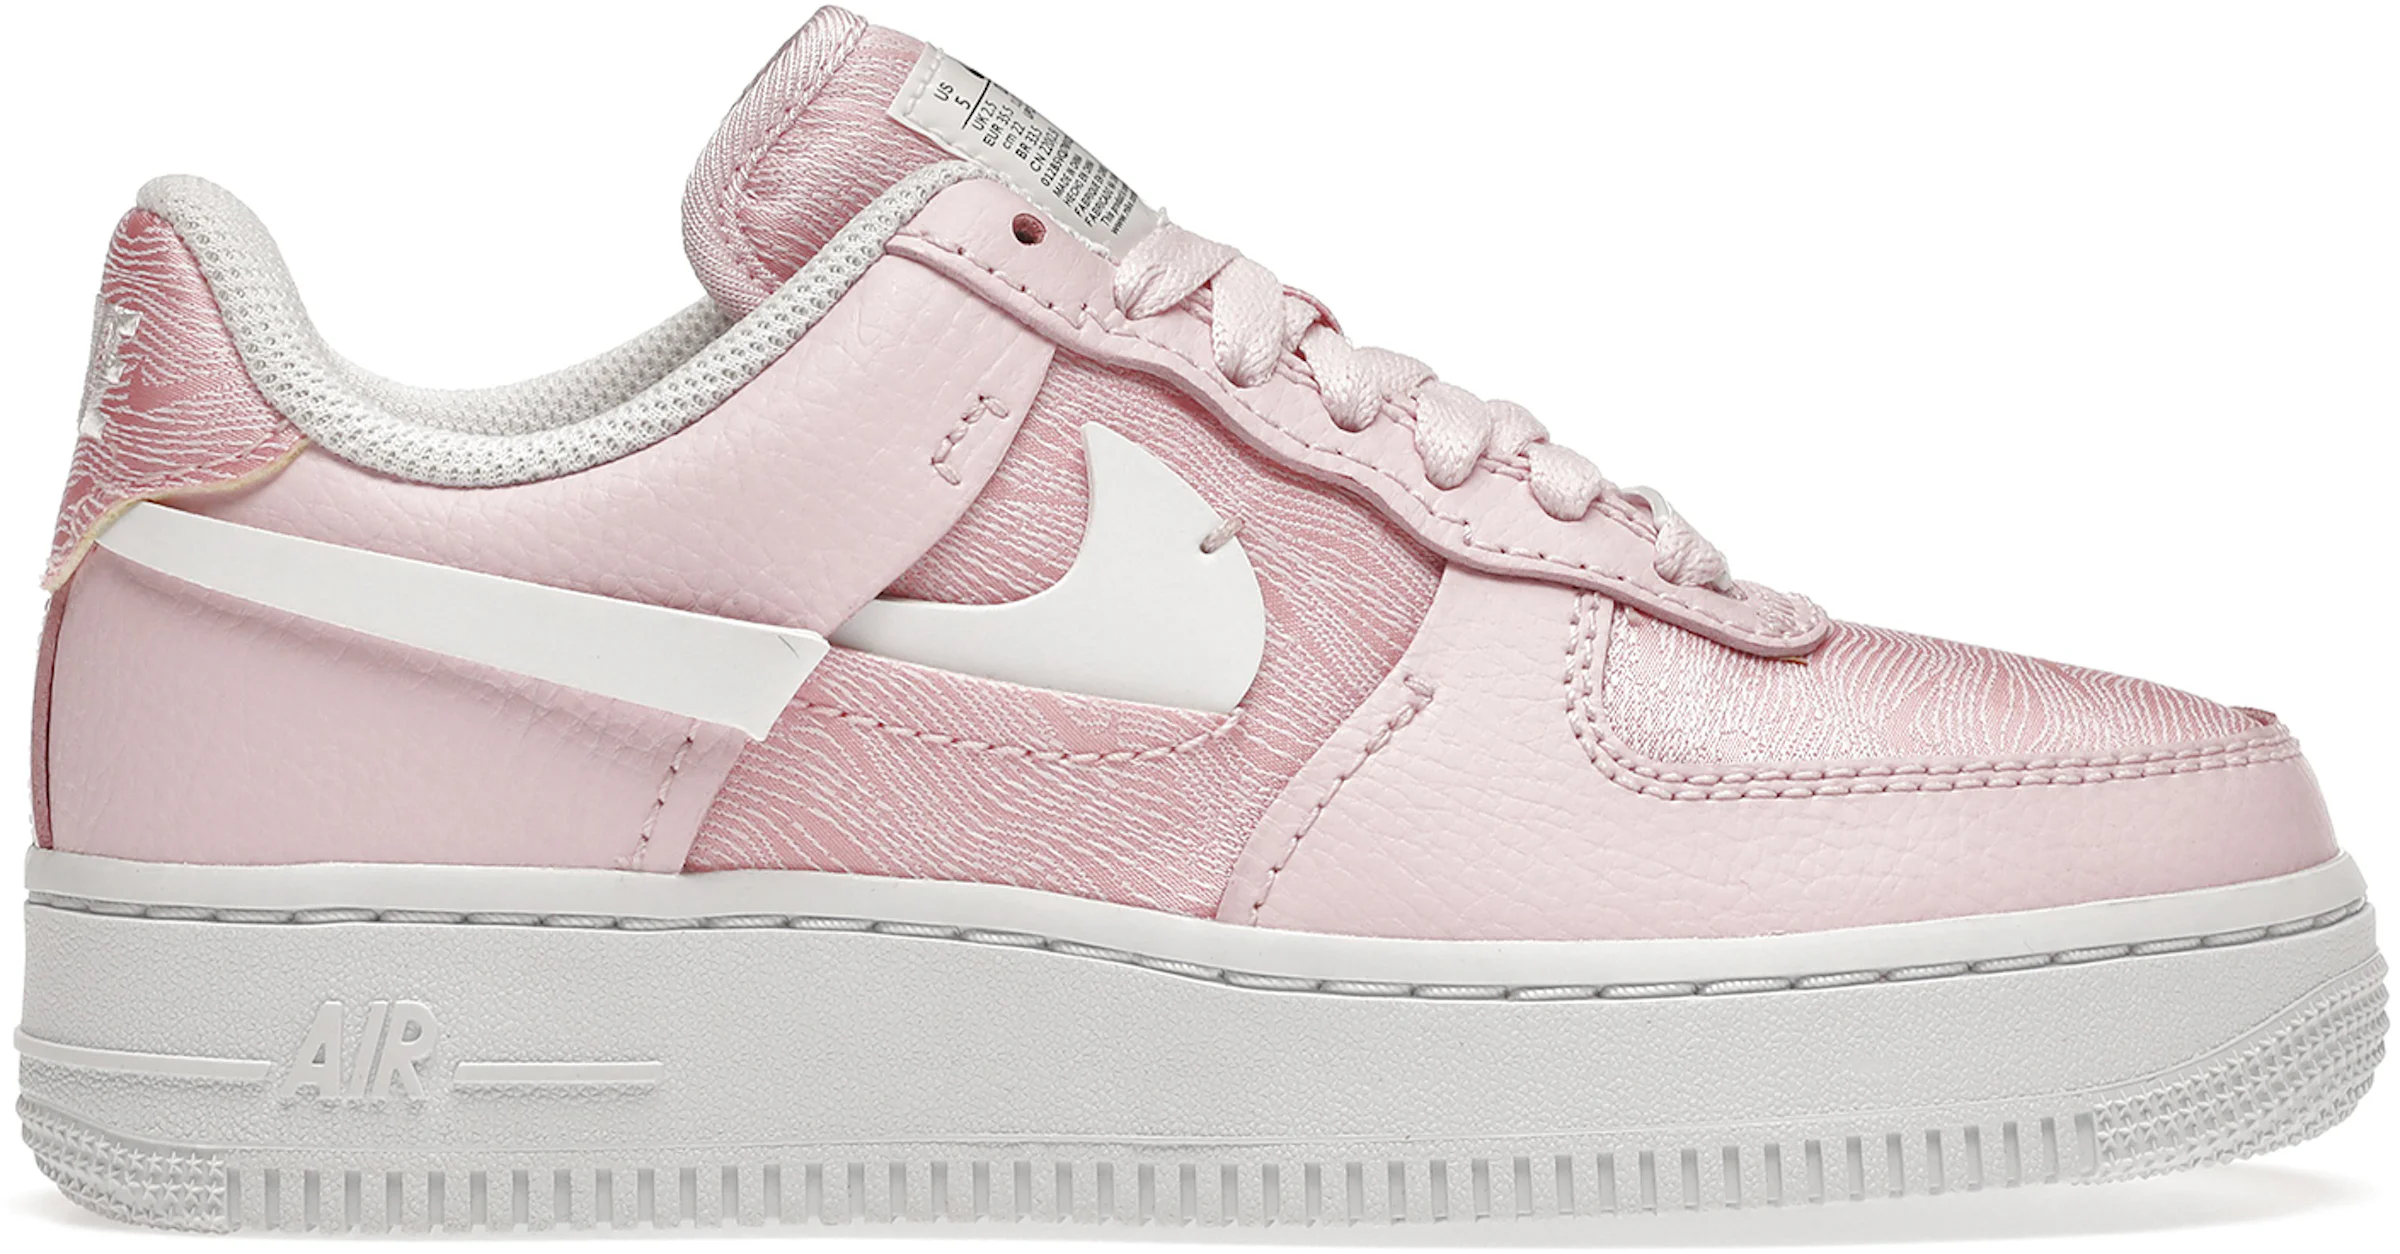 Nike Air Force 1 Low LX - Zapatos deportivos para mujer, color  blanco/blanco-rosa, talla 6, Blanco/Blanco-Rosa Prime